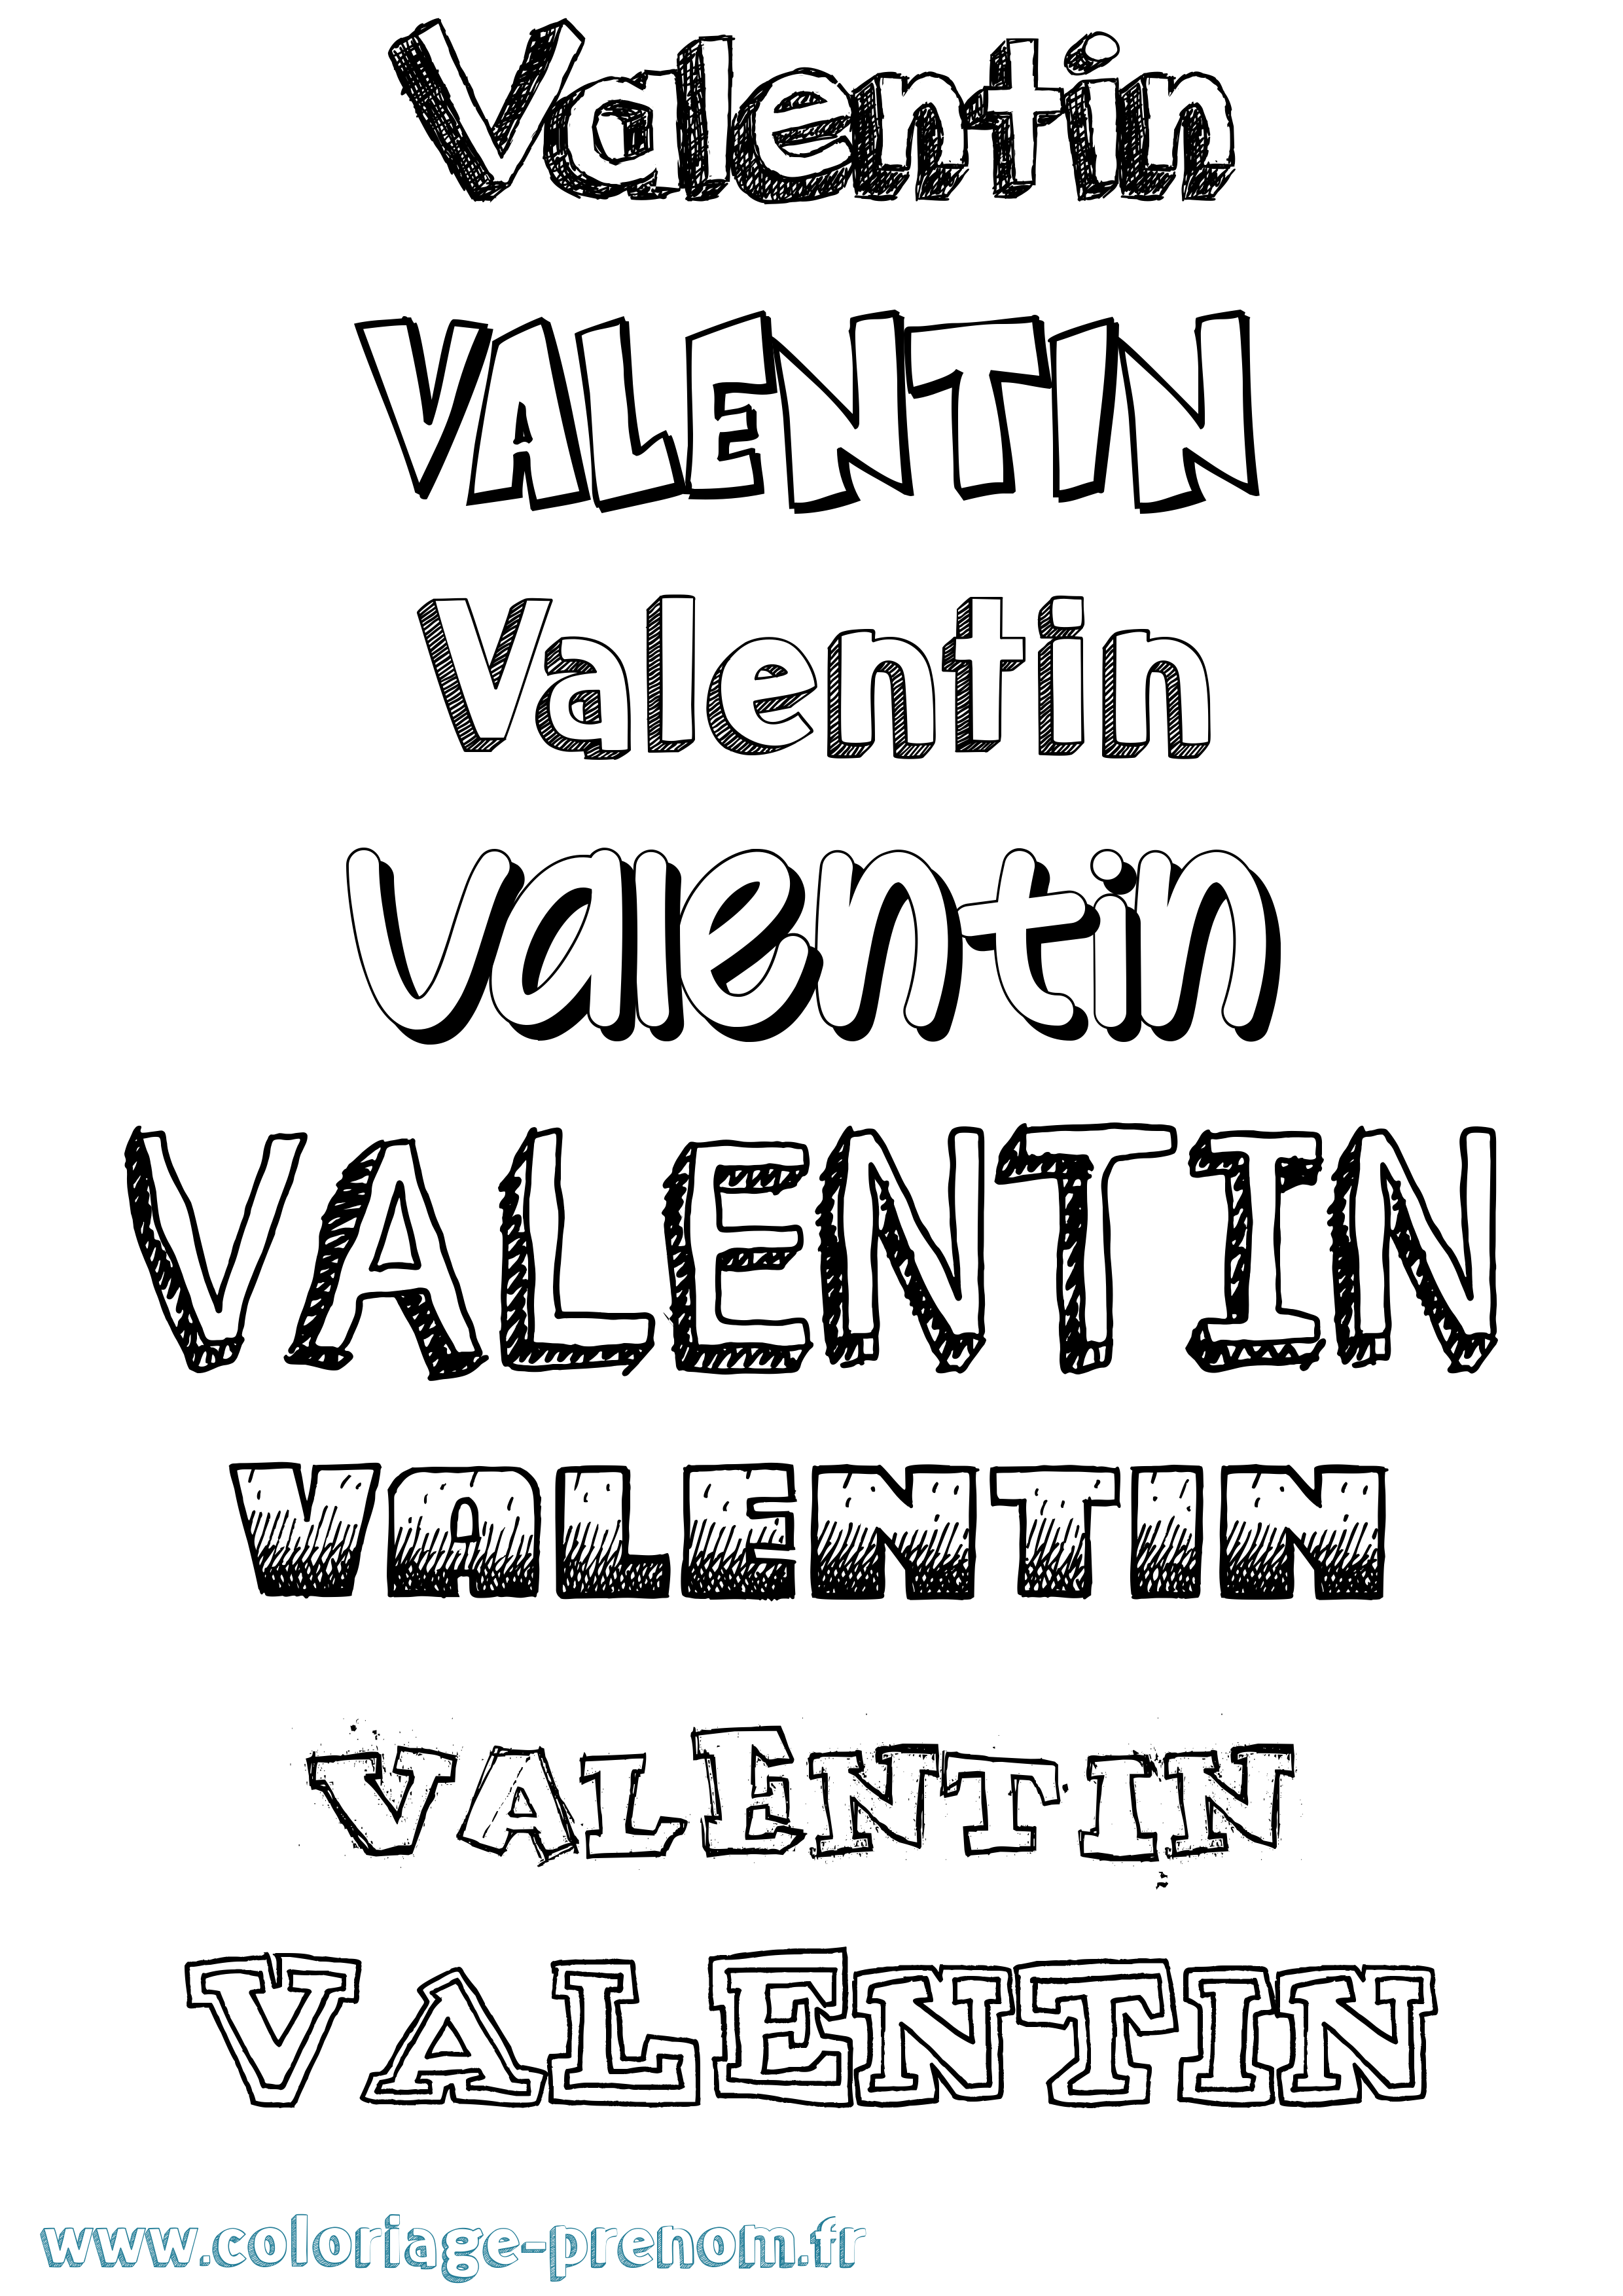 Coloriage prénom Valentin Dessiné